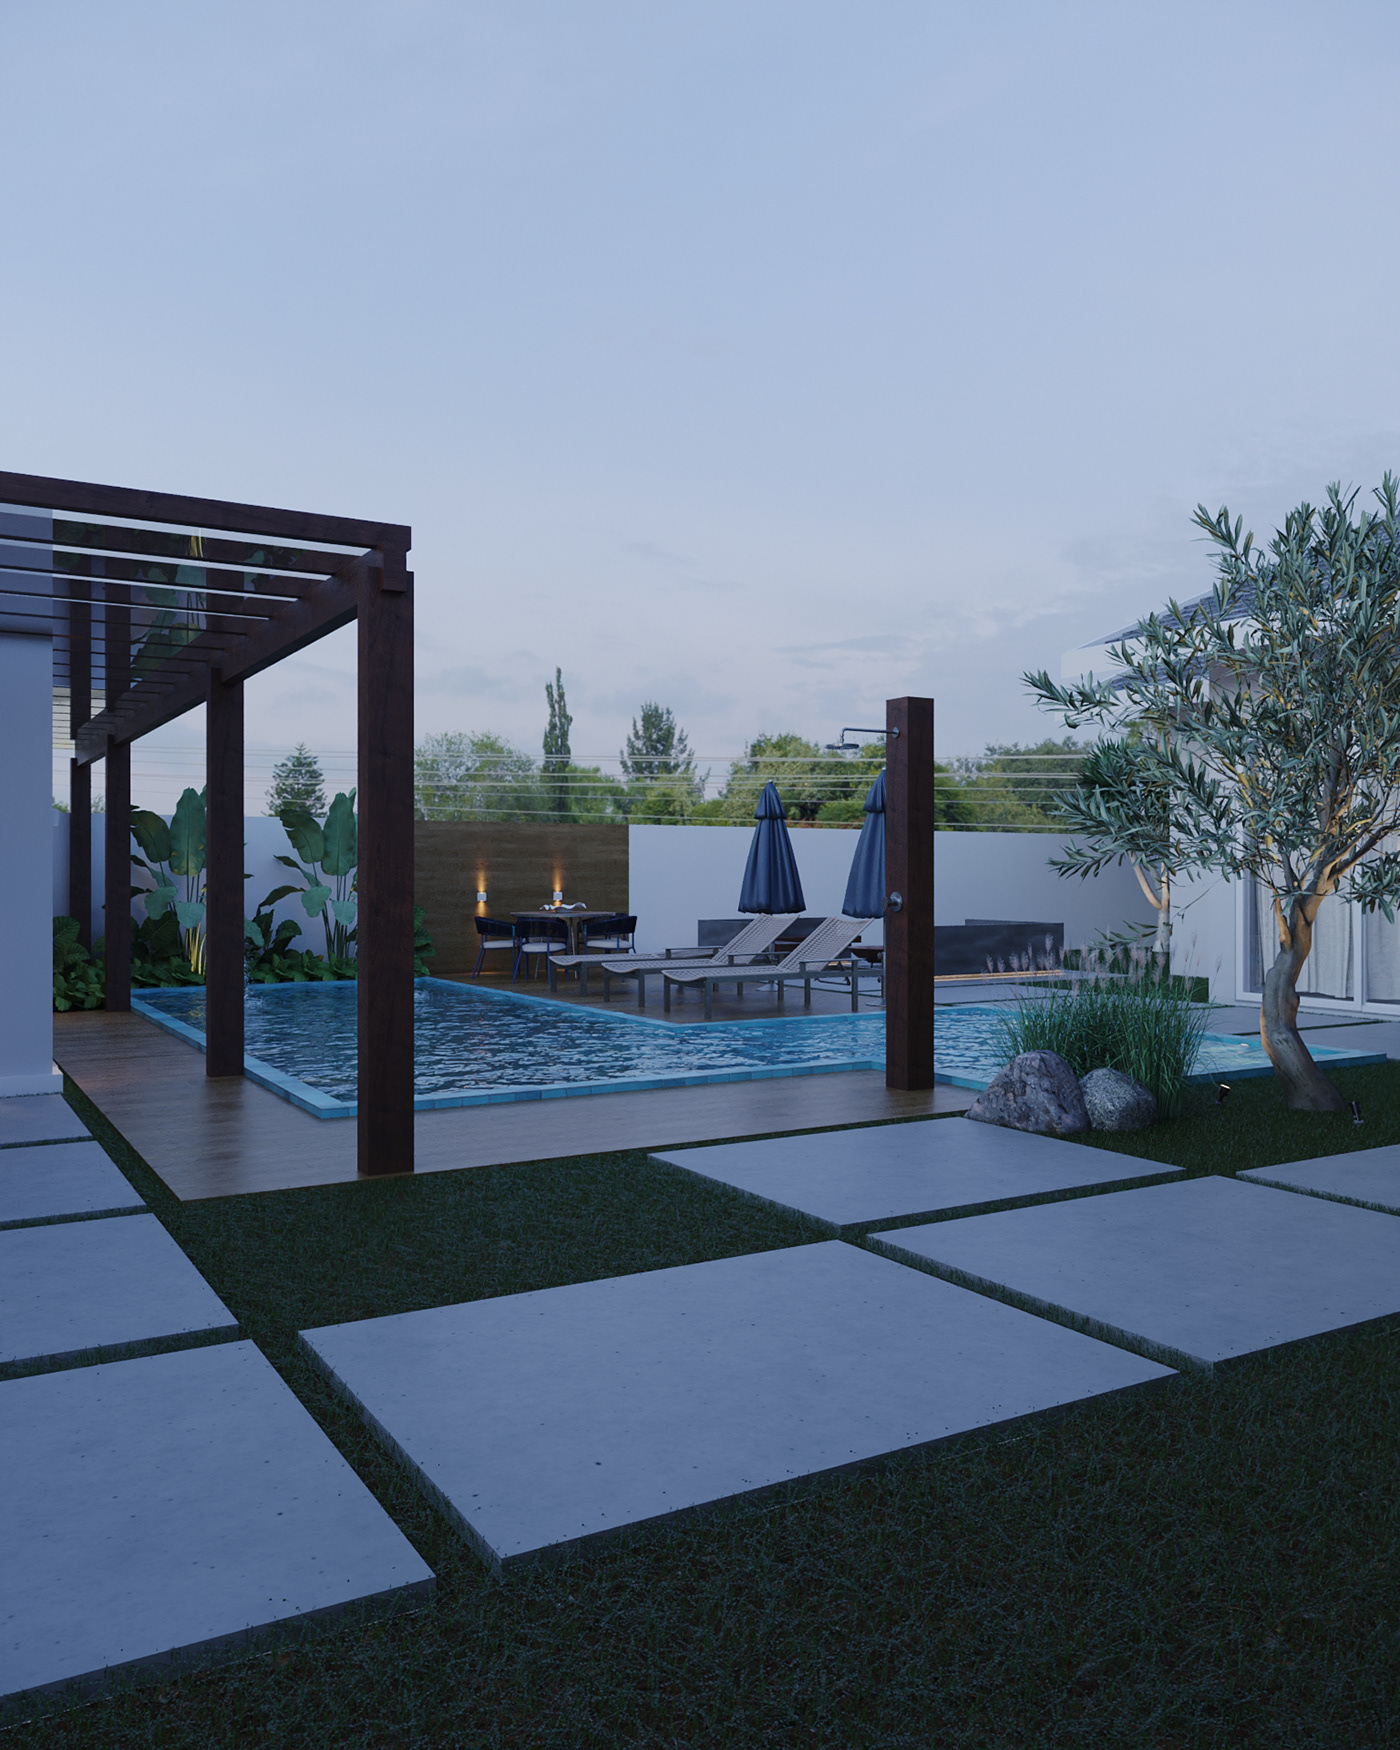 Area Gourmet projeto arquitetônico paisagismo piscina ARQUITETURA architecture Render 3ds max exterior área de festas